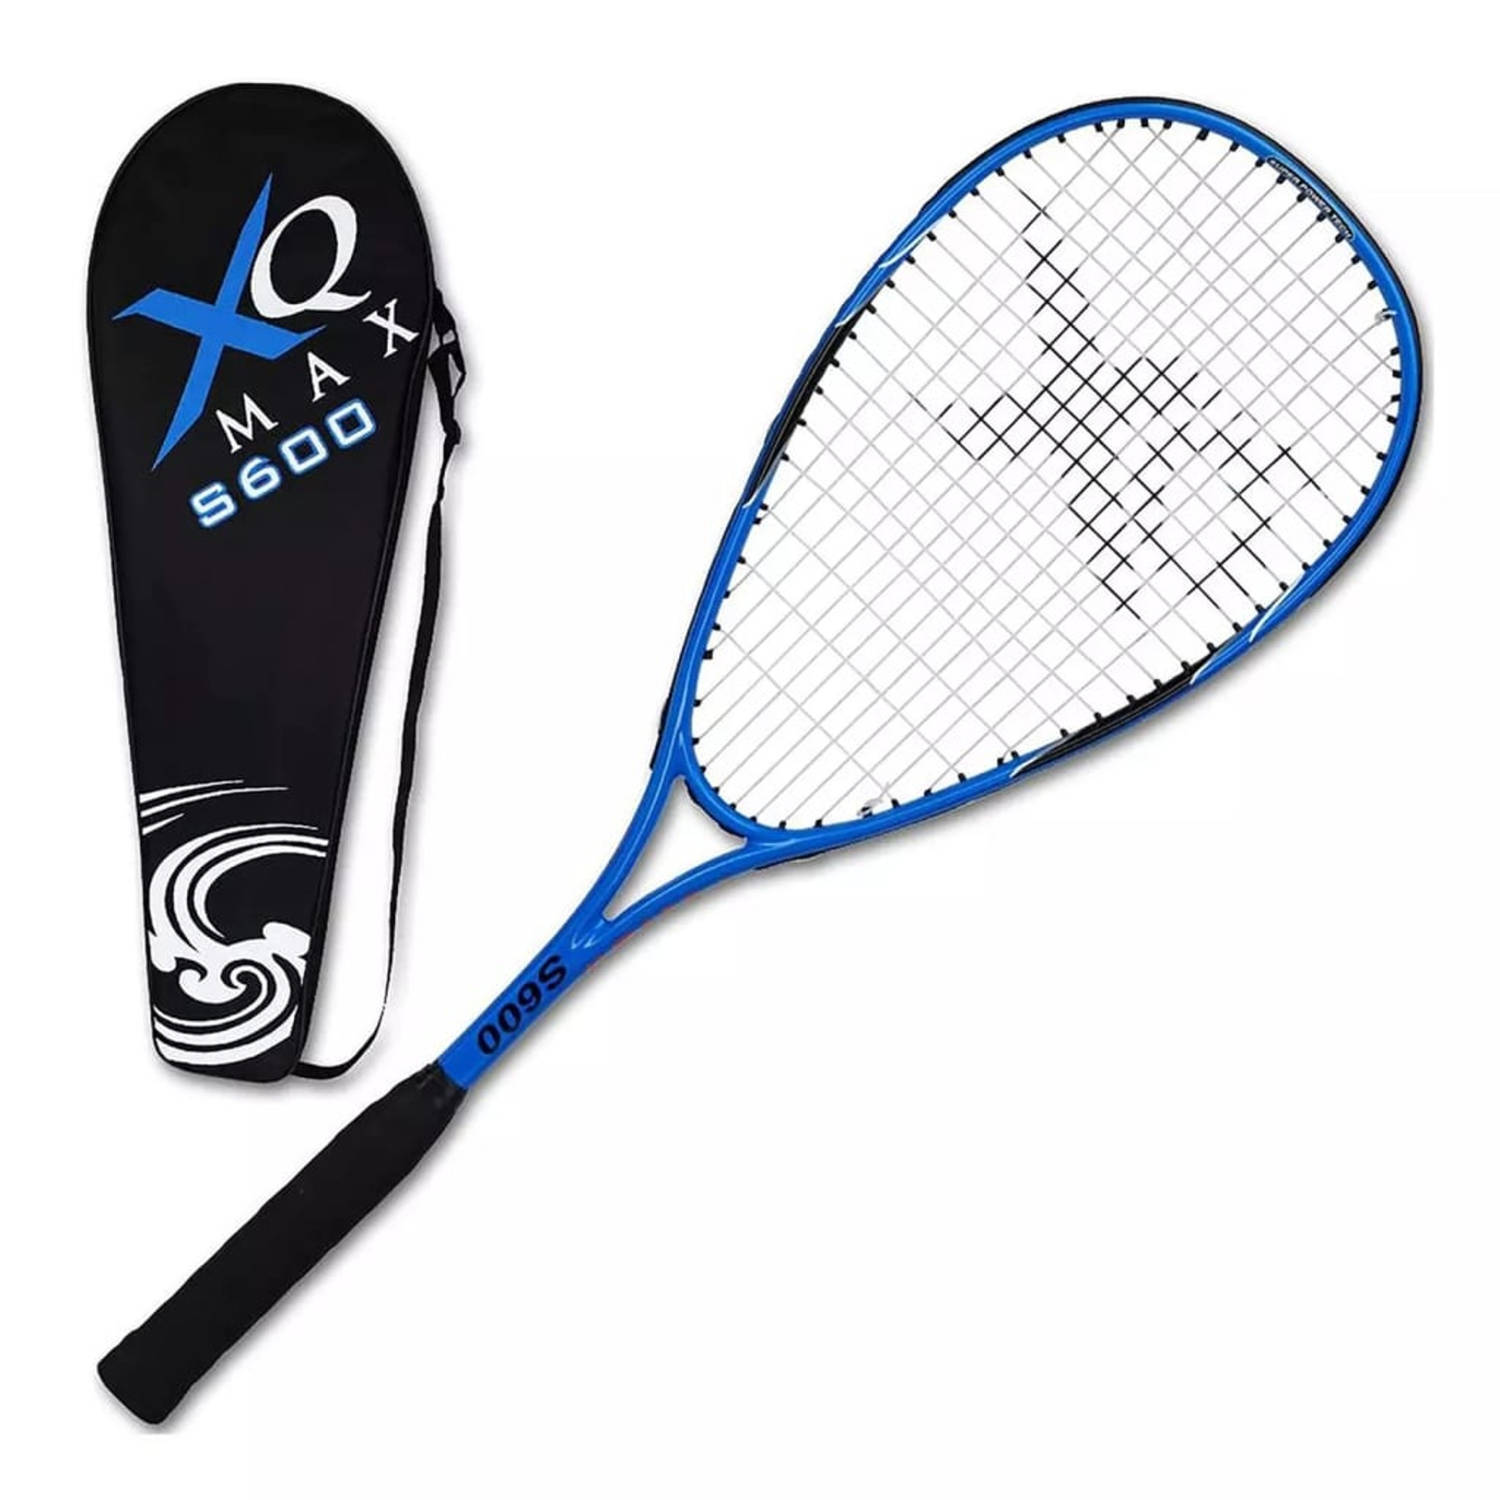 XQMAX S600 Squash Racket